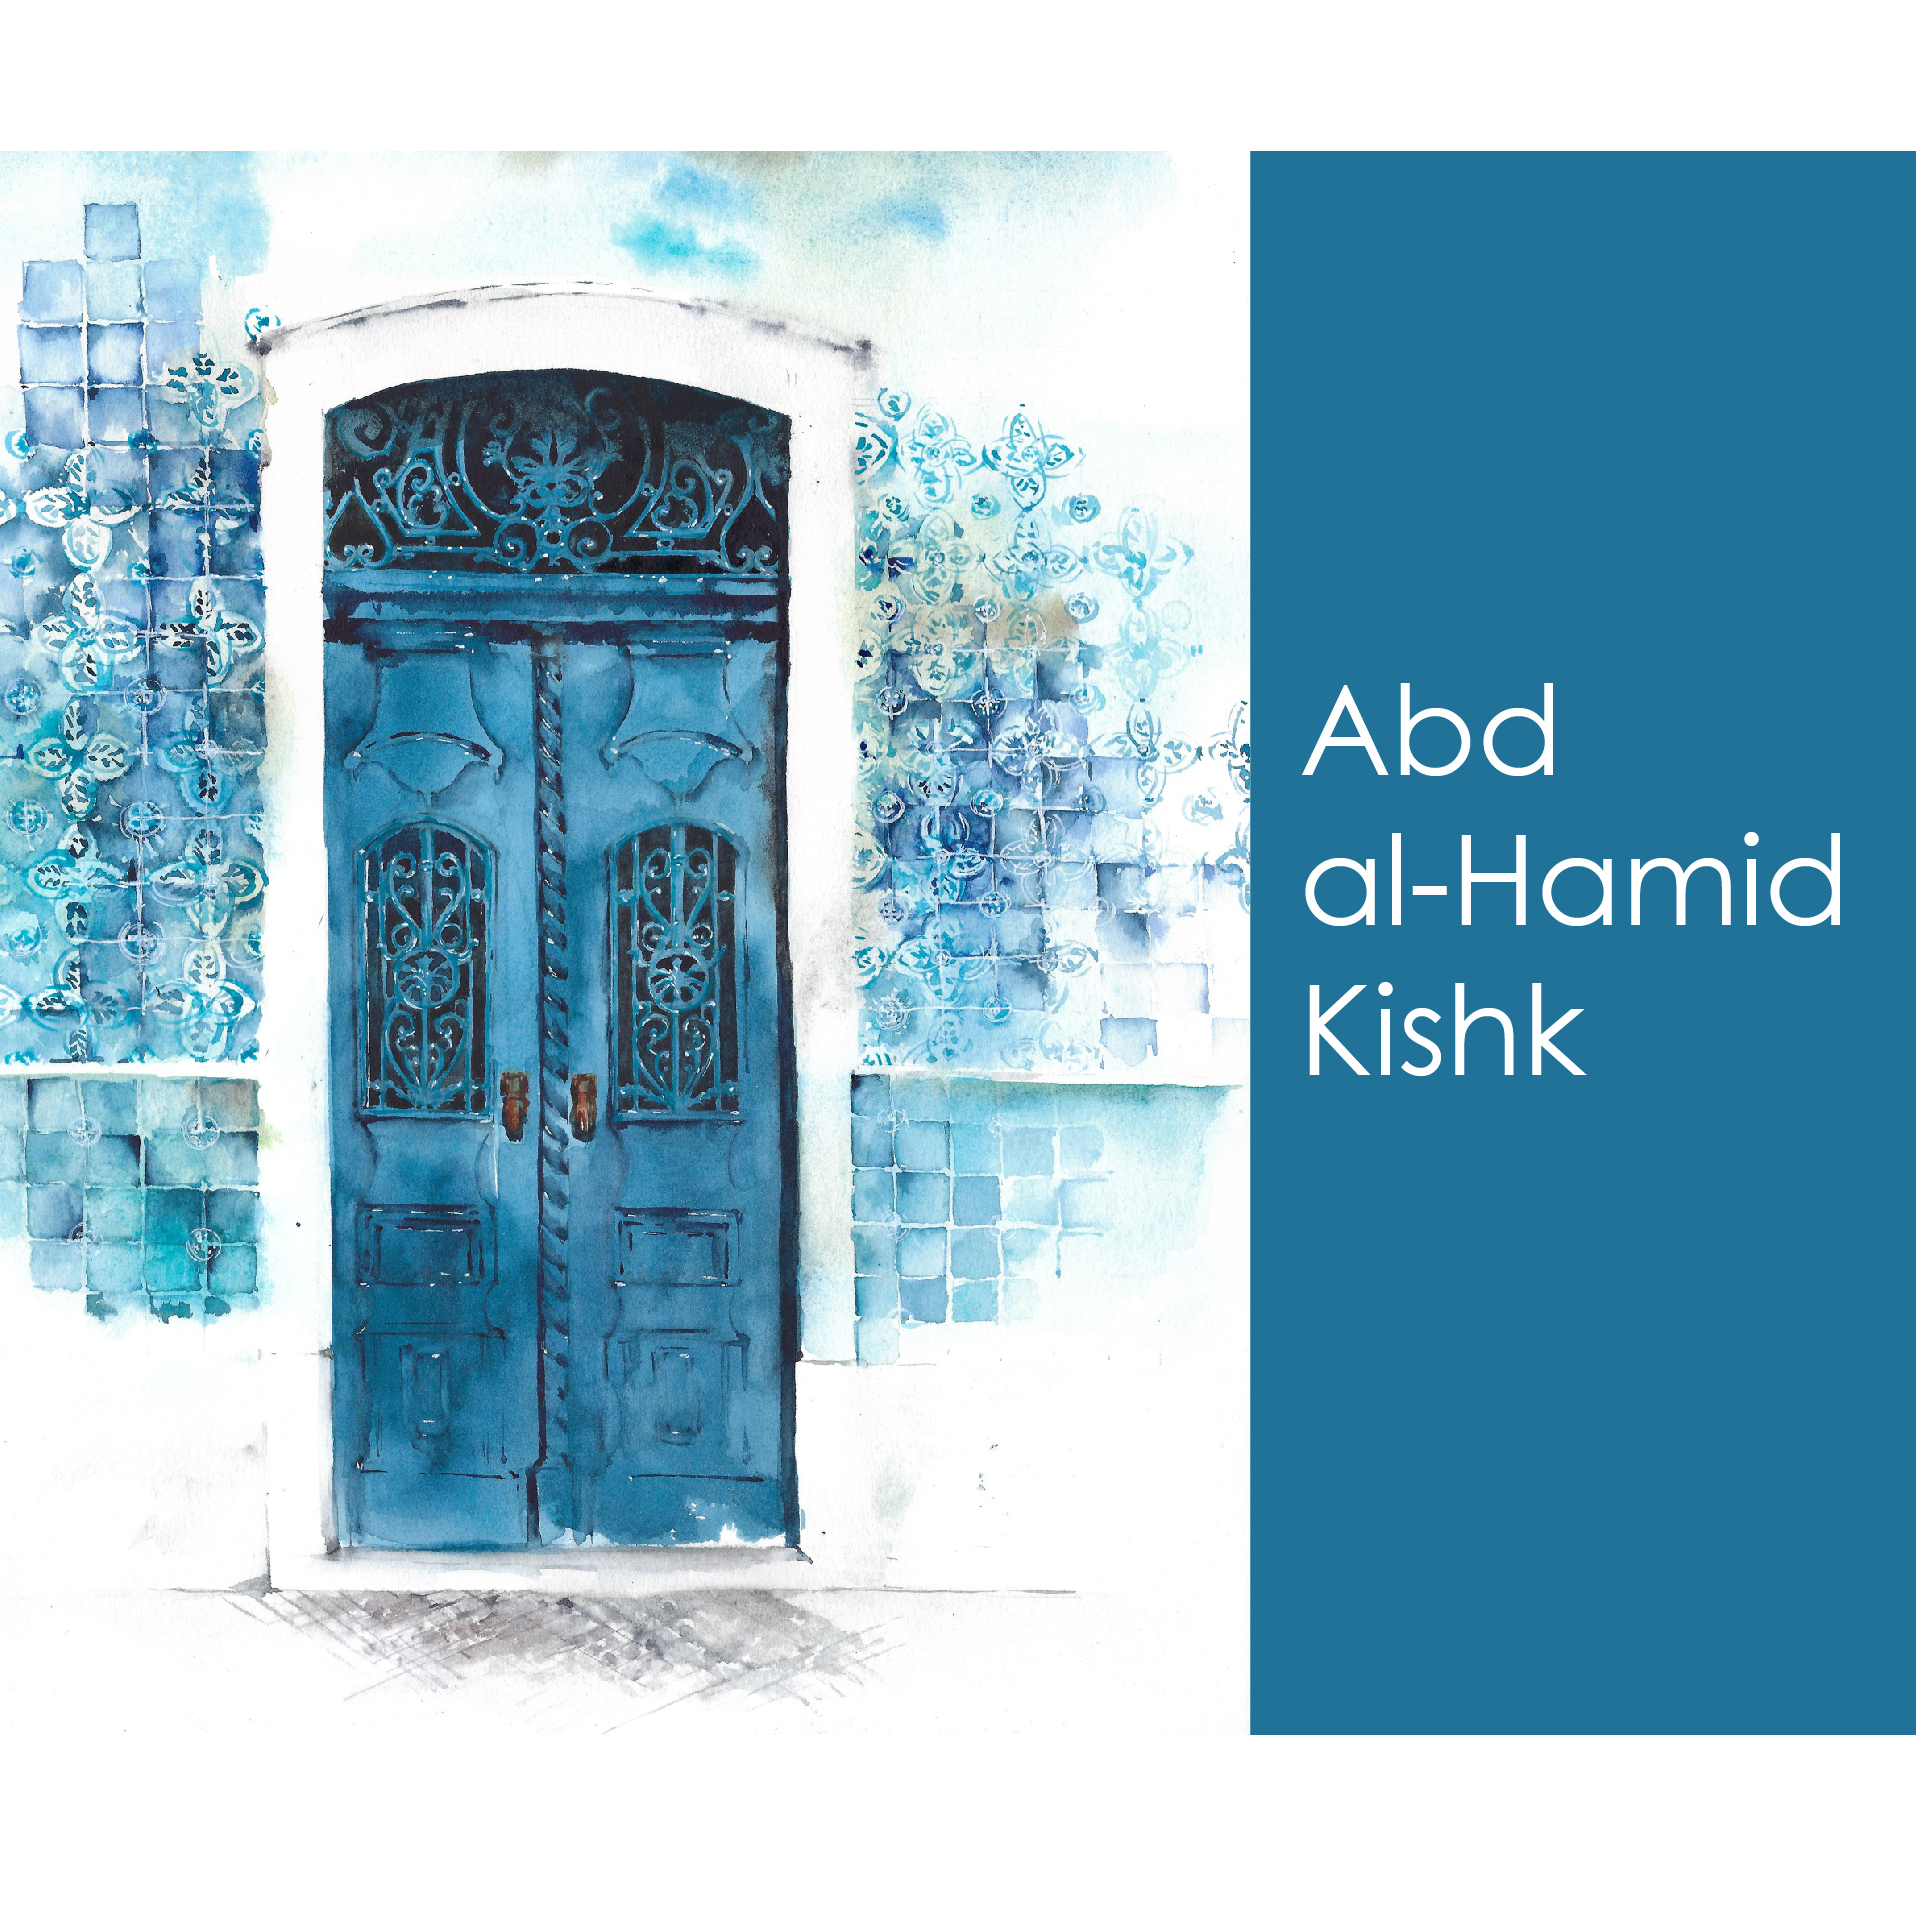 Abd al-Hamid Kishk Channel